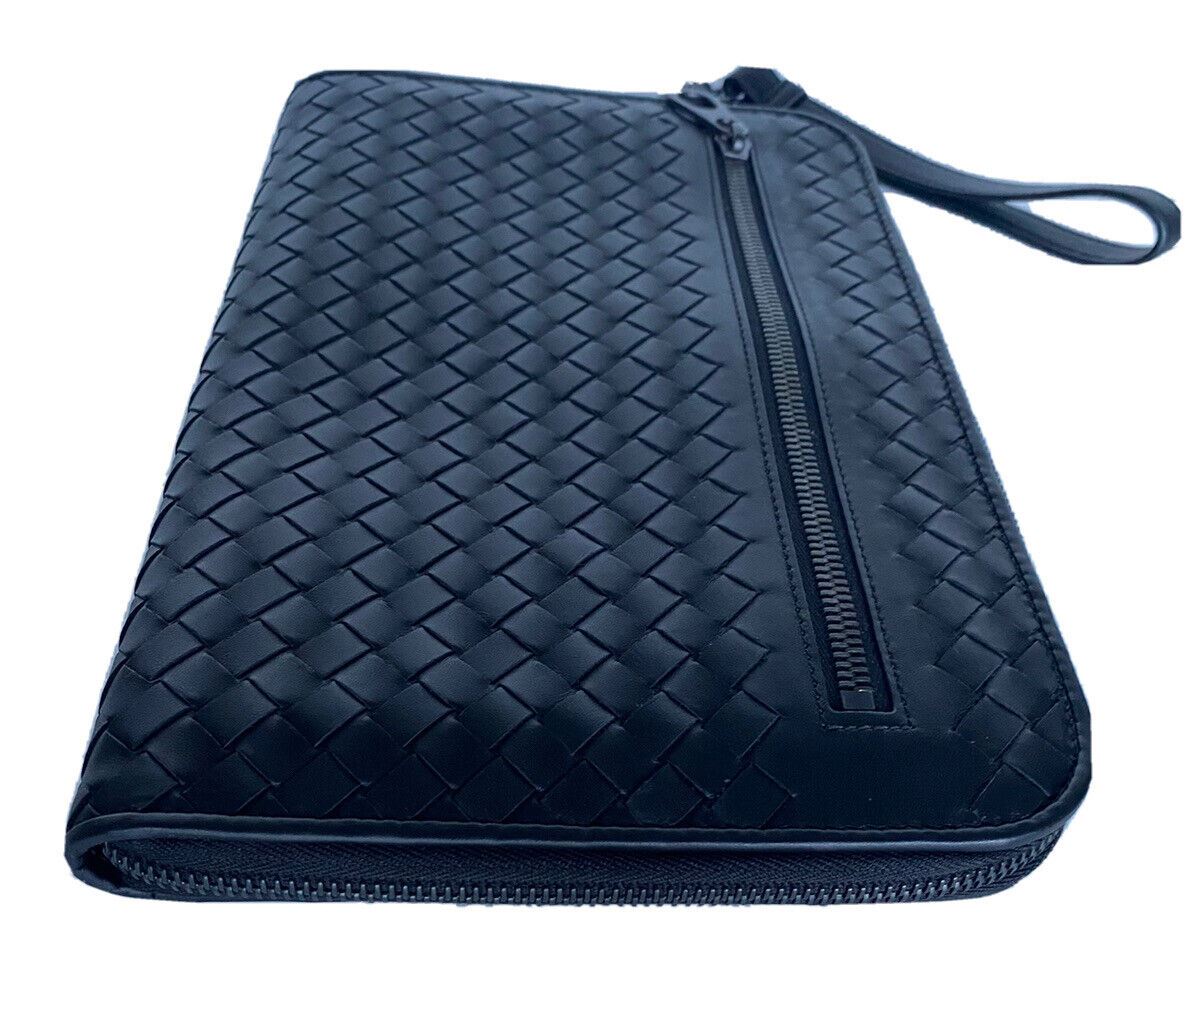 NWT $1470 Bottega Veneta Intrecciato Leather Black Document Case 493190 Italy